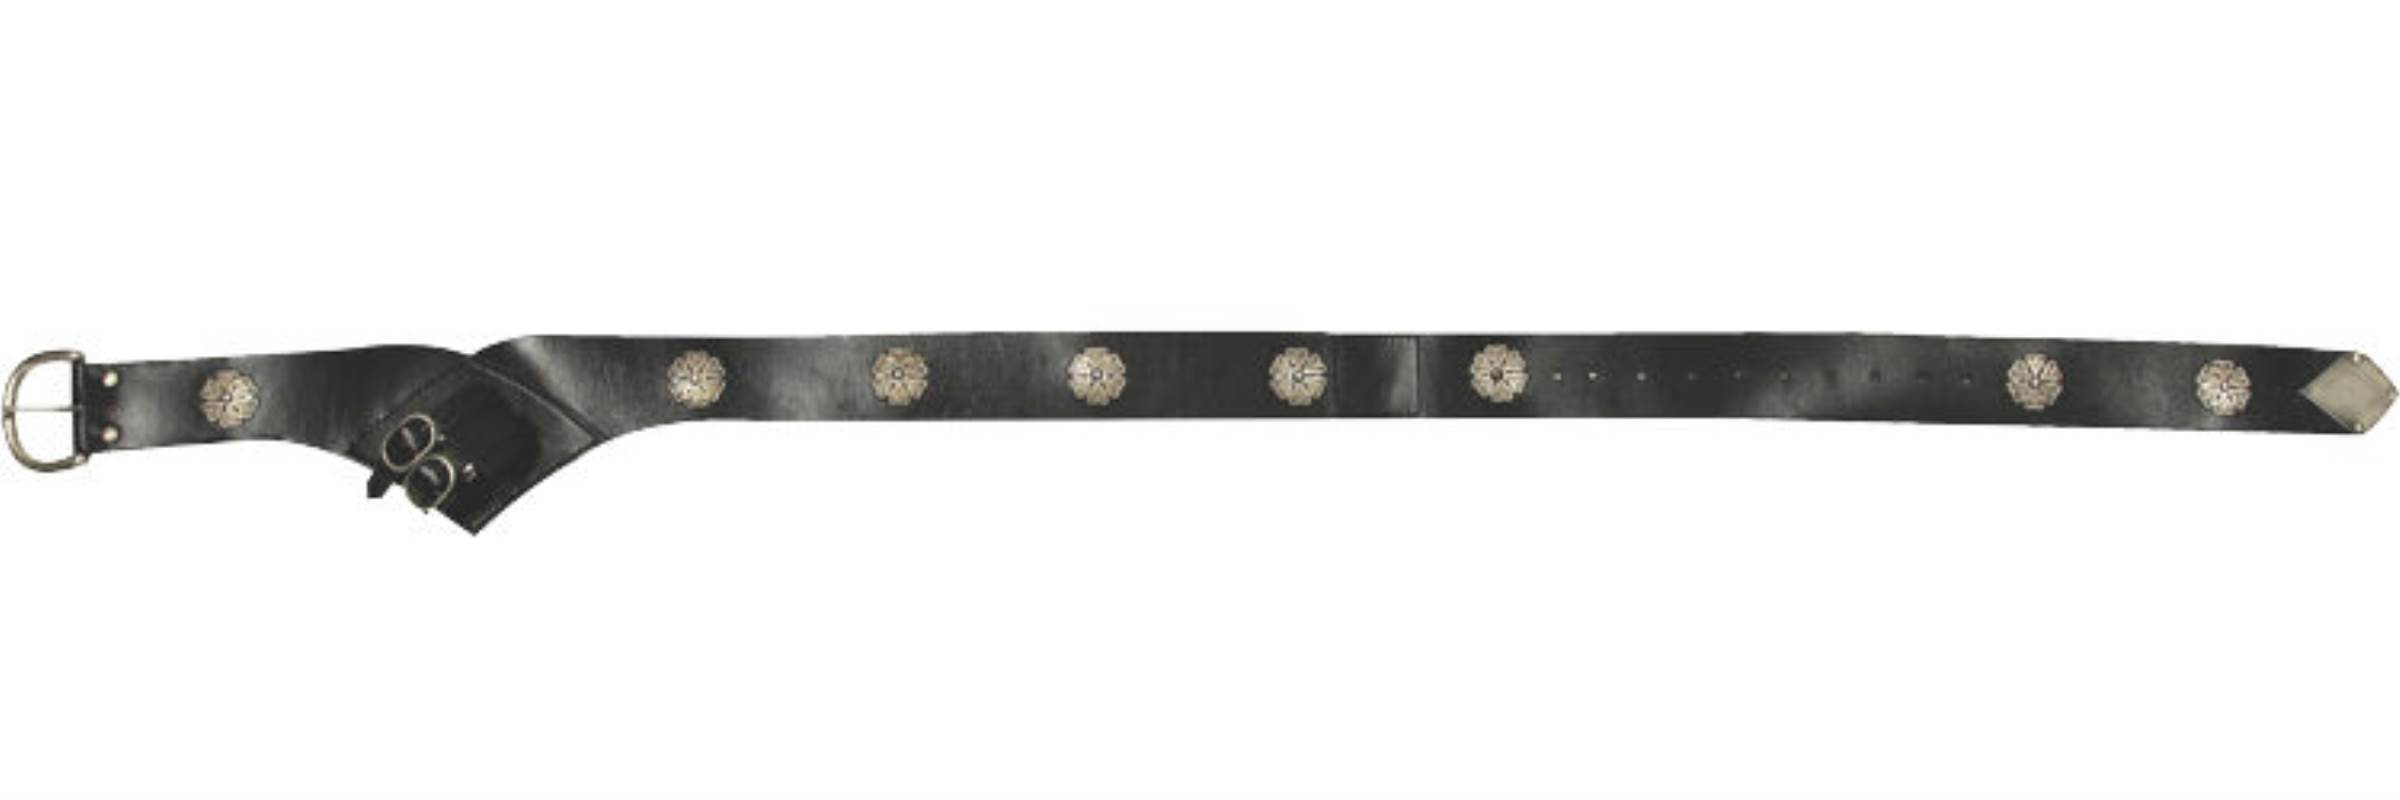 Adjustable Medieval Sword Belt - Belts And Accessories at